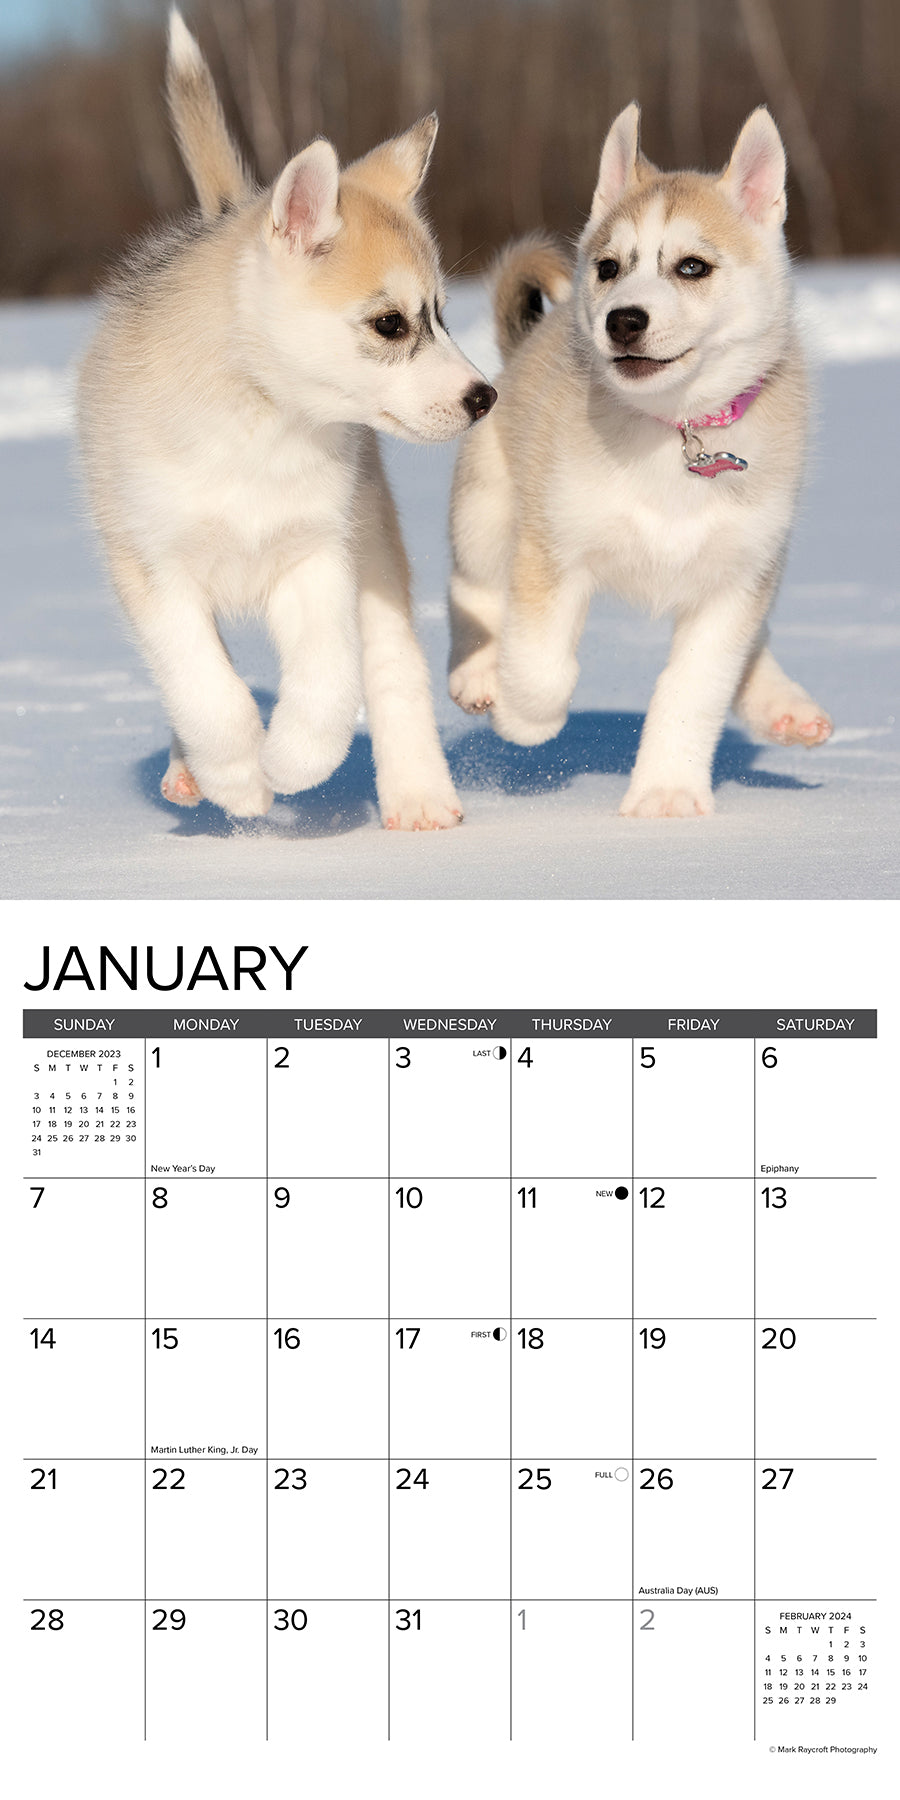 2024 Puppy Playmates - Wall Calendar